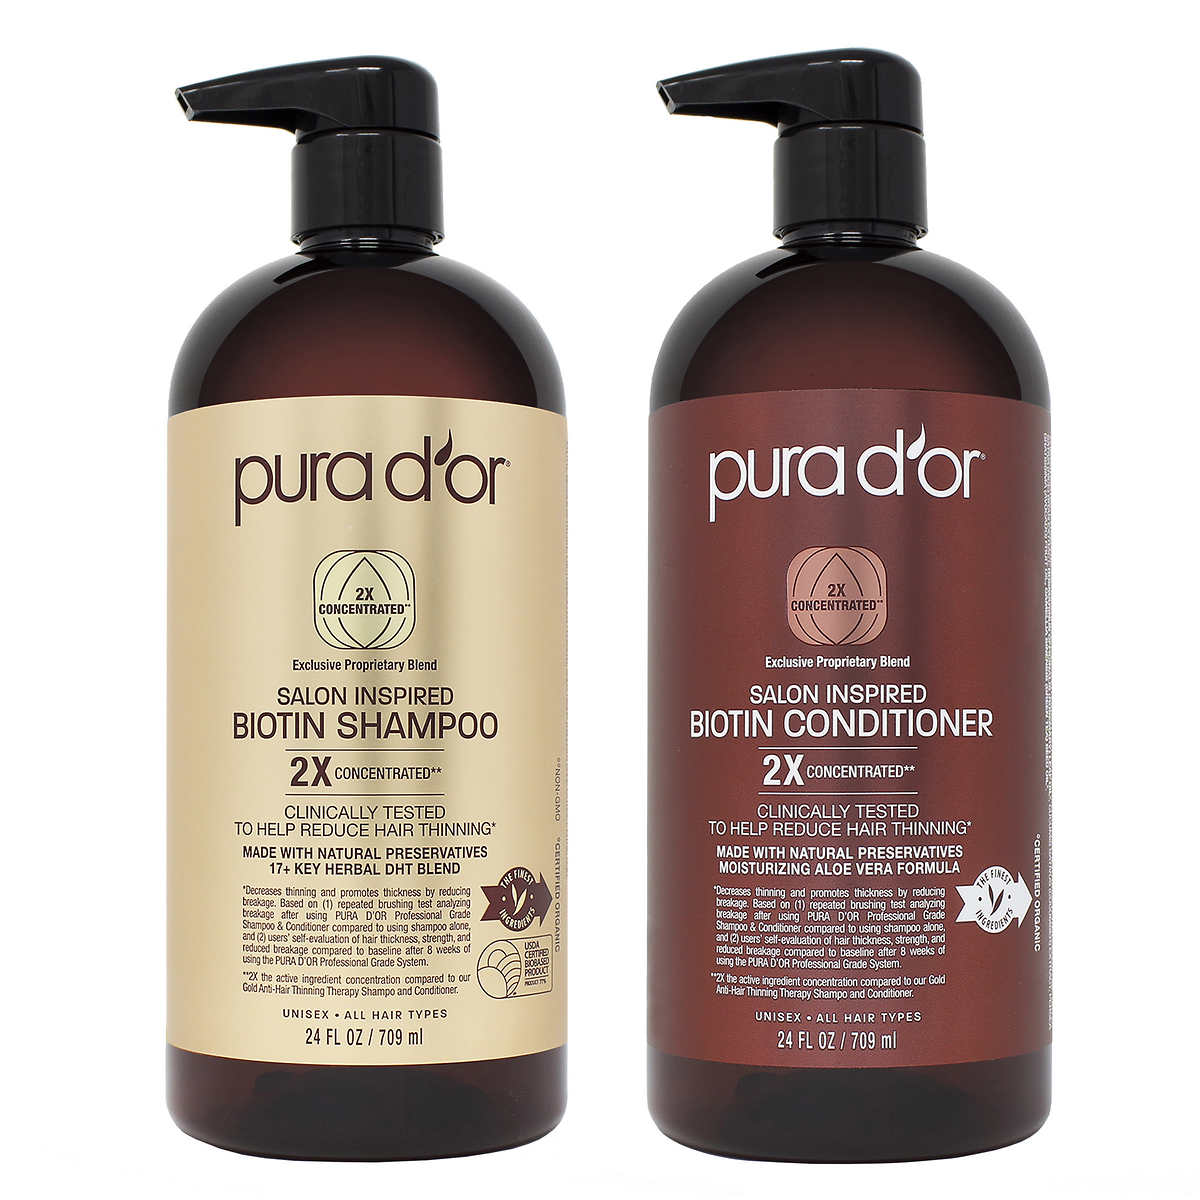 Pura d'or Salon Inspired Biotin Shampoo & Conditioner Duo